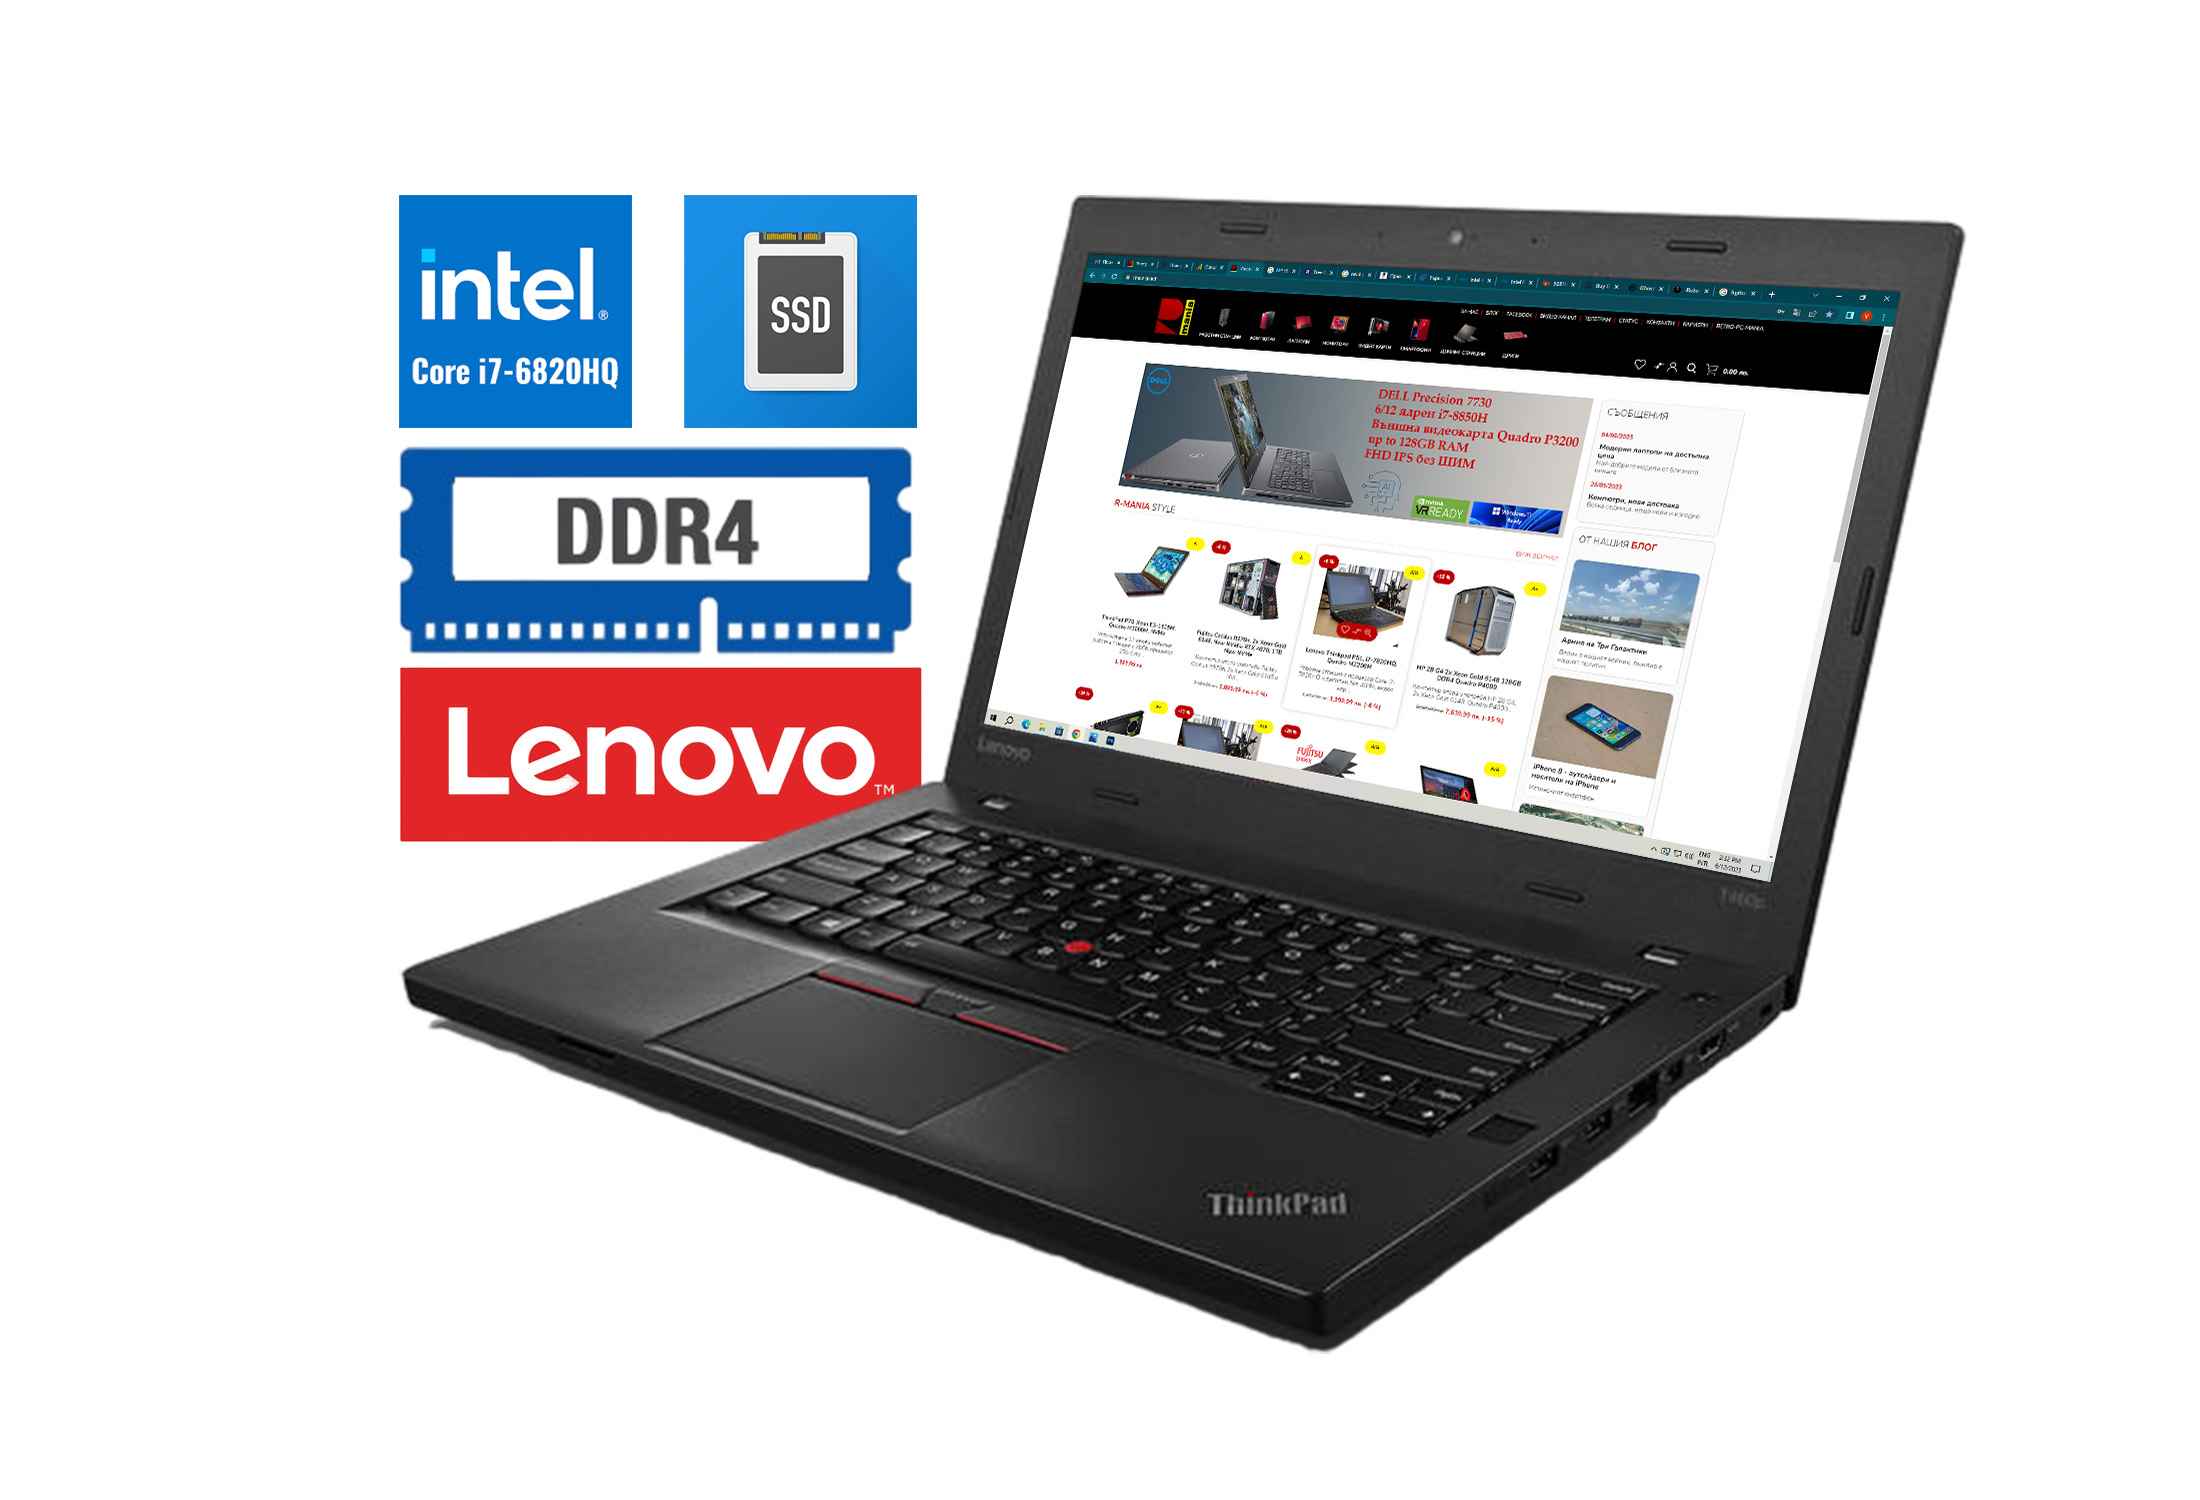 Lenovo Thinkpad T460p i5-6440HQ 16GB RAM HD Graphics 520-dcKz0.jpeg